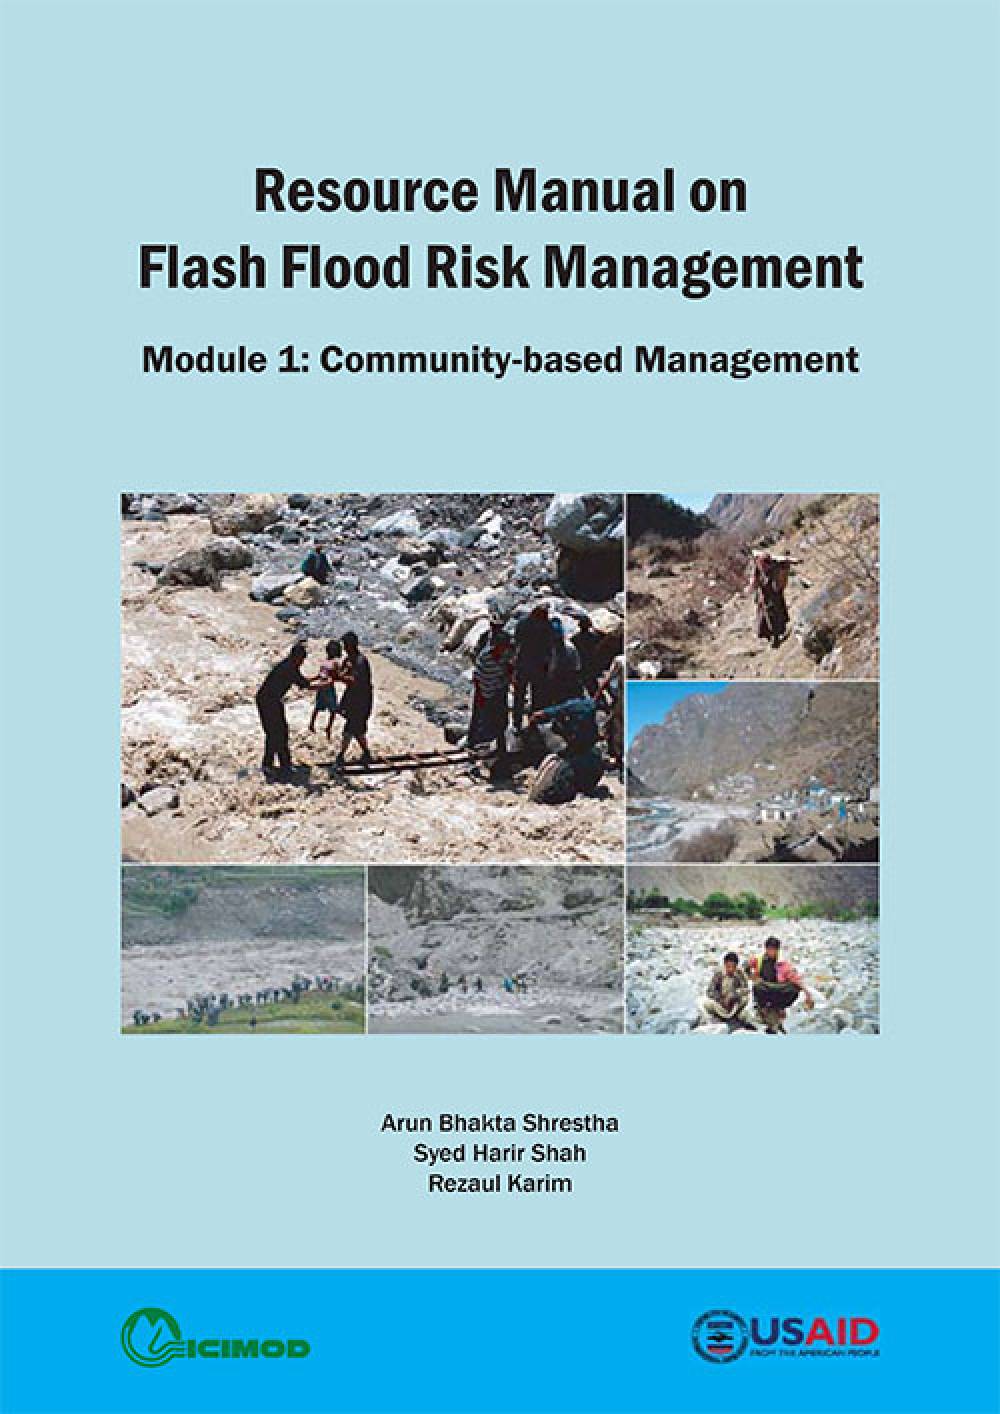 Flash Flood Risk Management Module 1